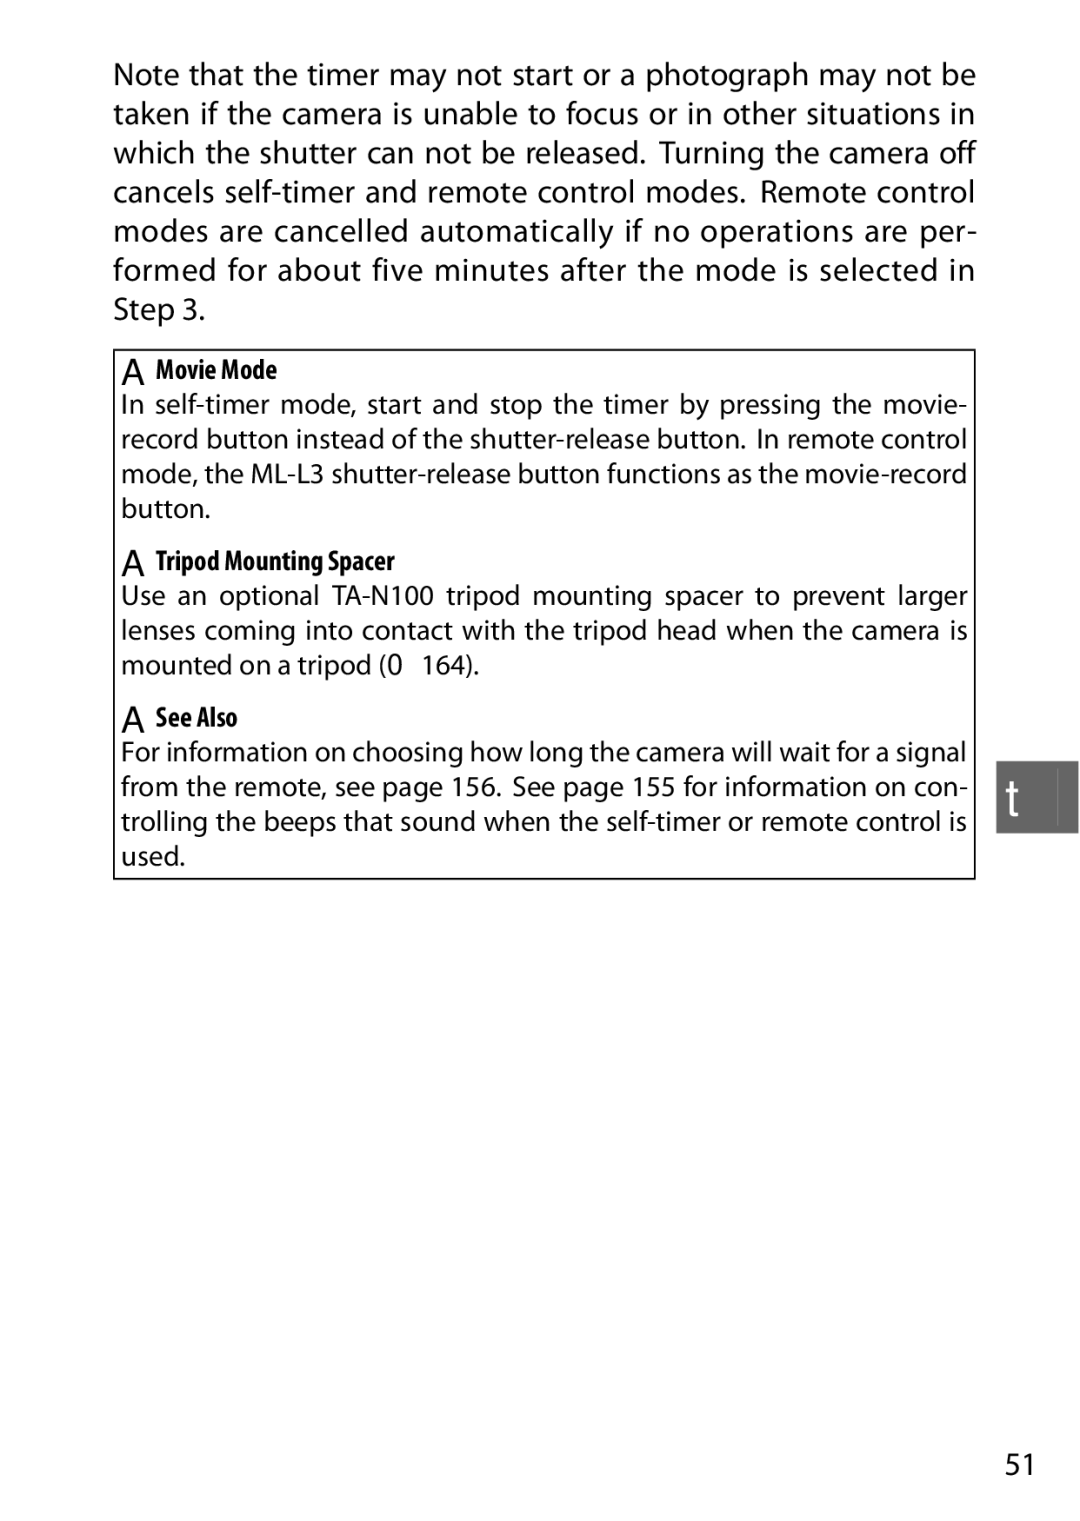 Nikon V1 manual AMovie Mode, ATripod Mounting Spacer 